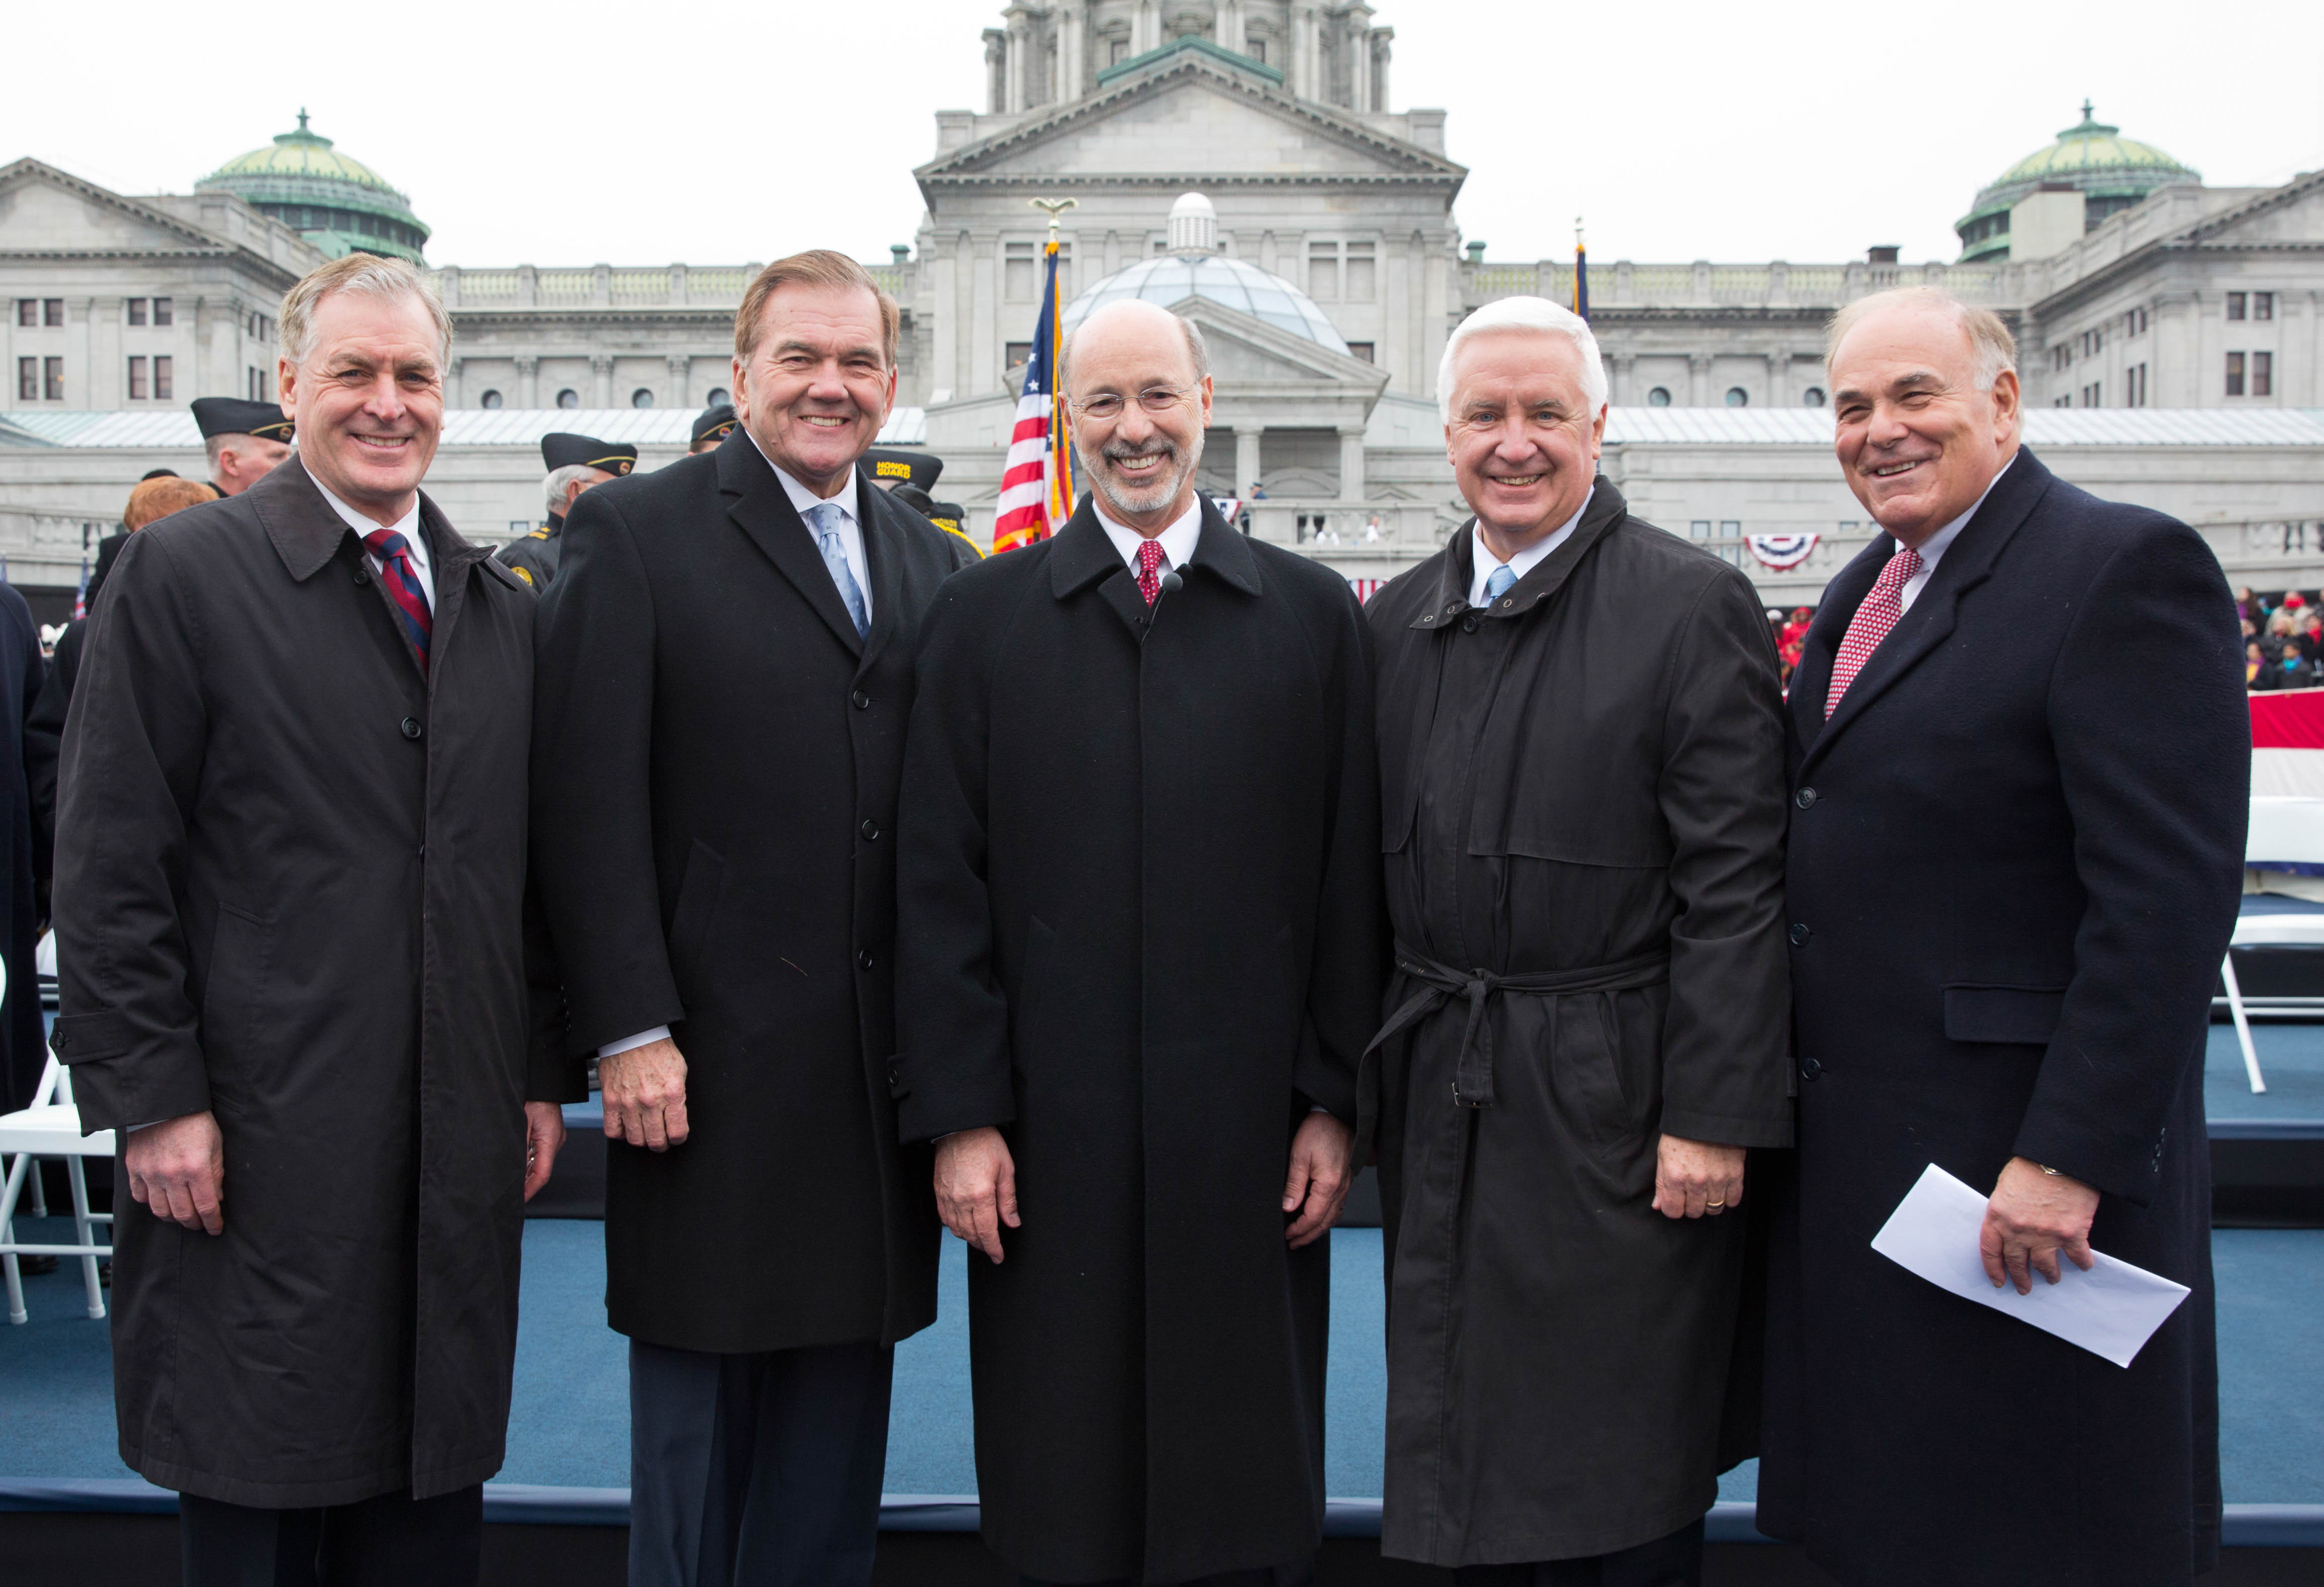 Mark Schweiker, Tom Ridge, Governor Tom Wolf, Tom Corbett, and Ed Rendell